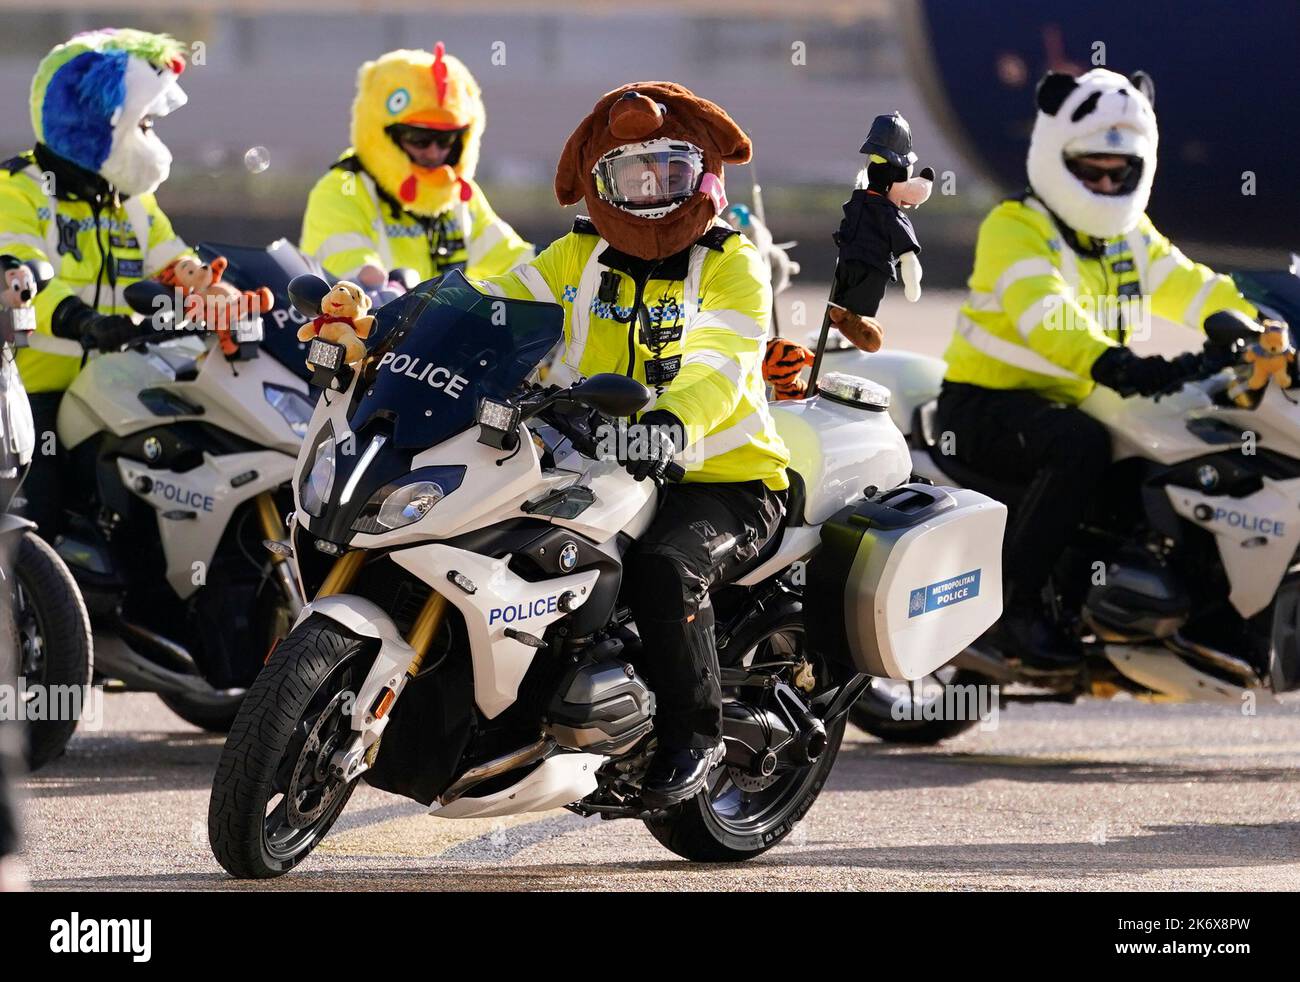 Comprar cascos de época casco de la motocicleta de la motocicleta Marko Jet  vendimia de los elementos -MÂRKÖ AZUL barato